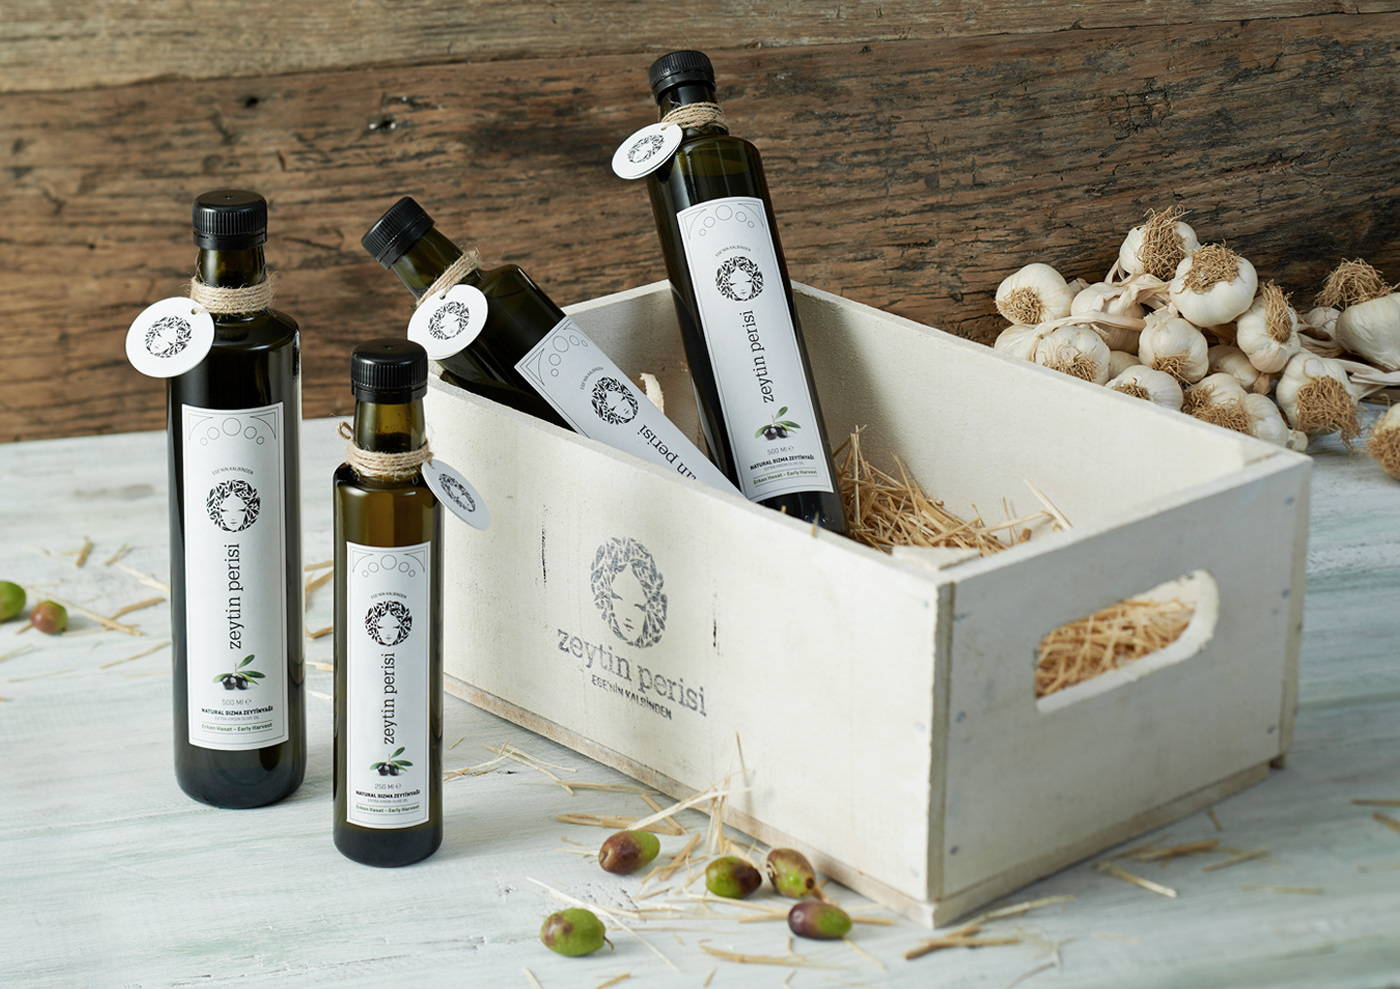 olive fairy zeytin perisi natural medusa soap bottle jar oil wood istanbul Turkey corporate identity logo